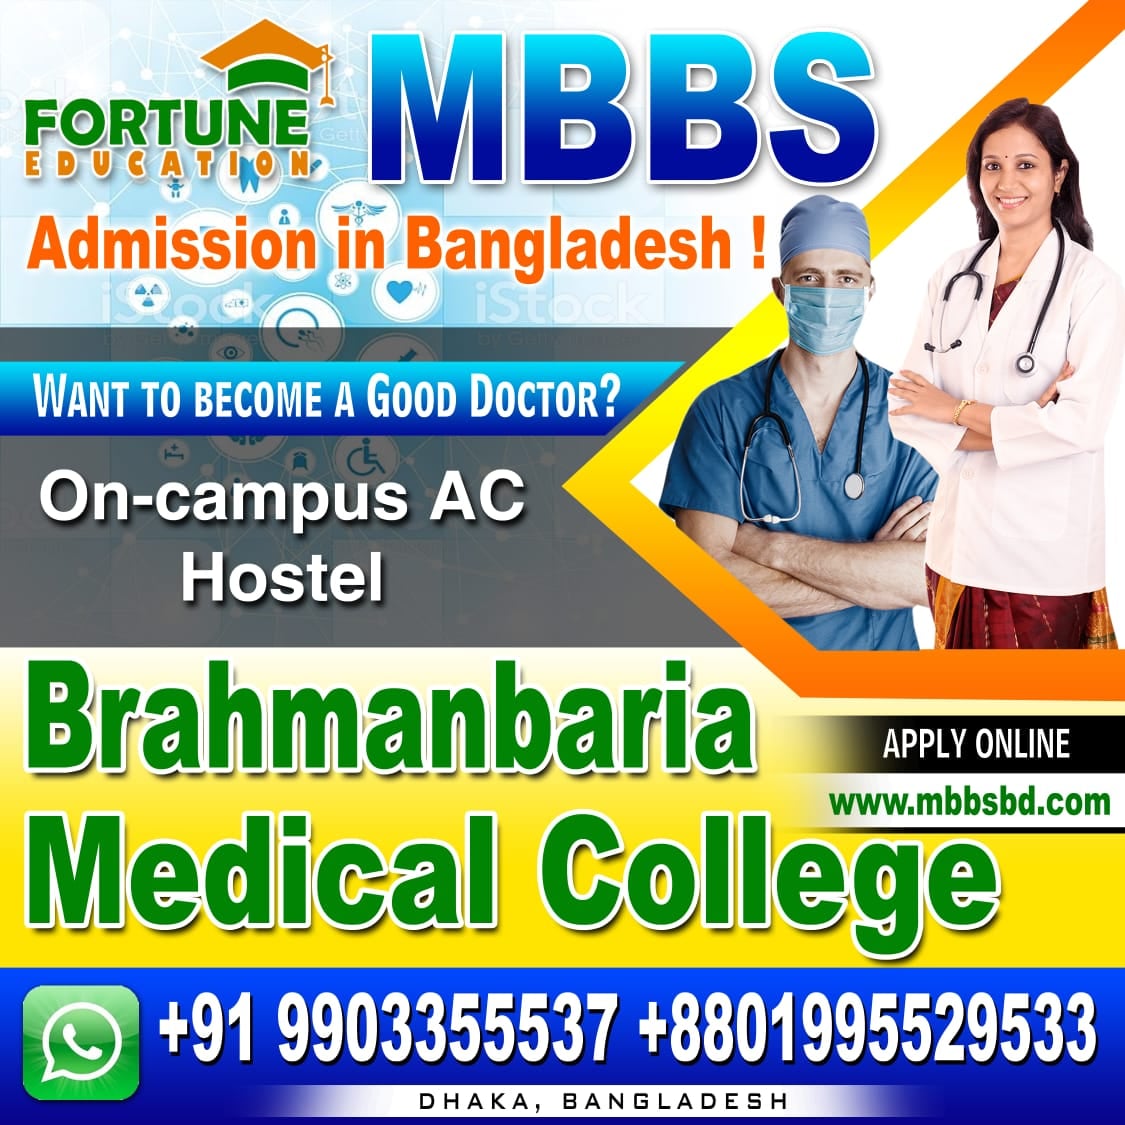 Brahmanbaria Medical College and Hospital